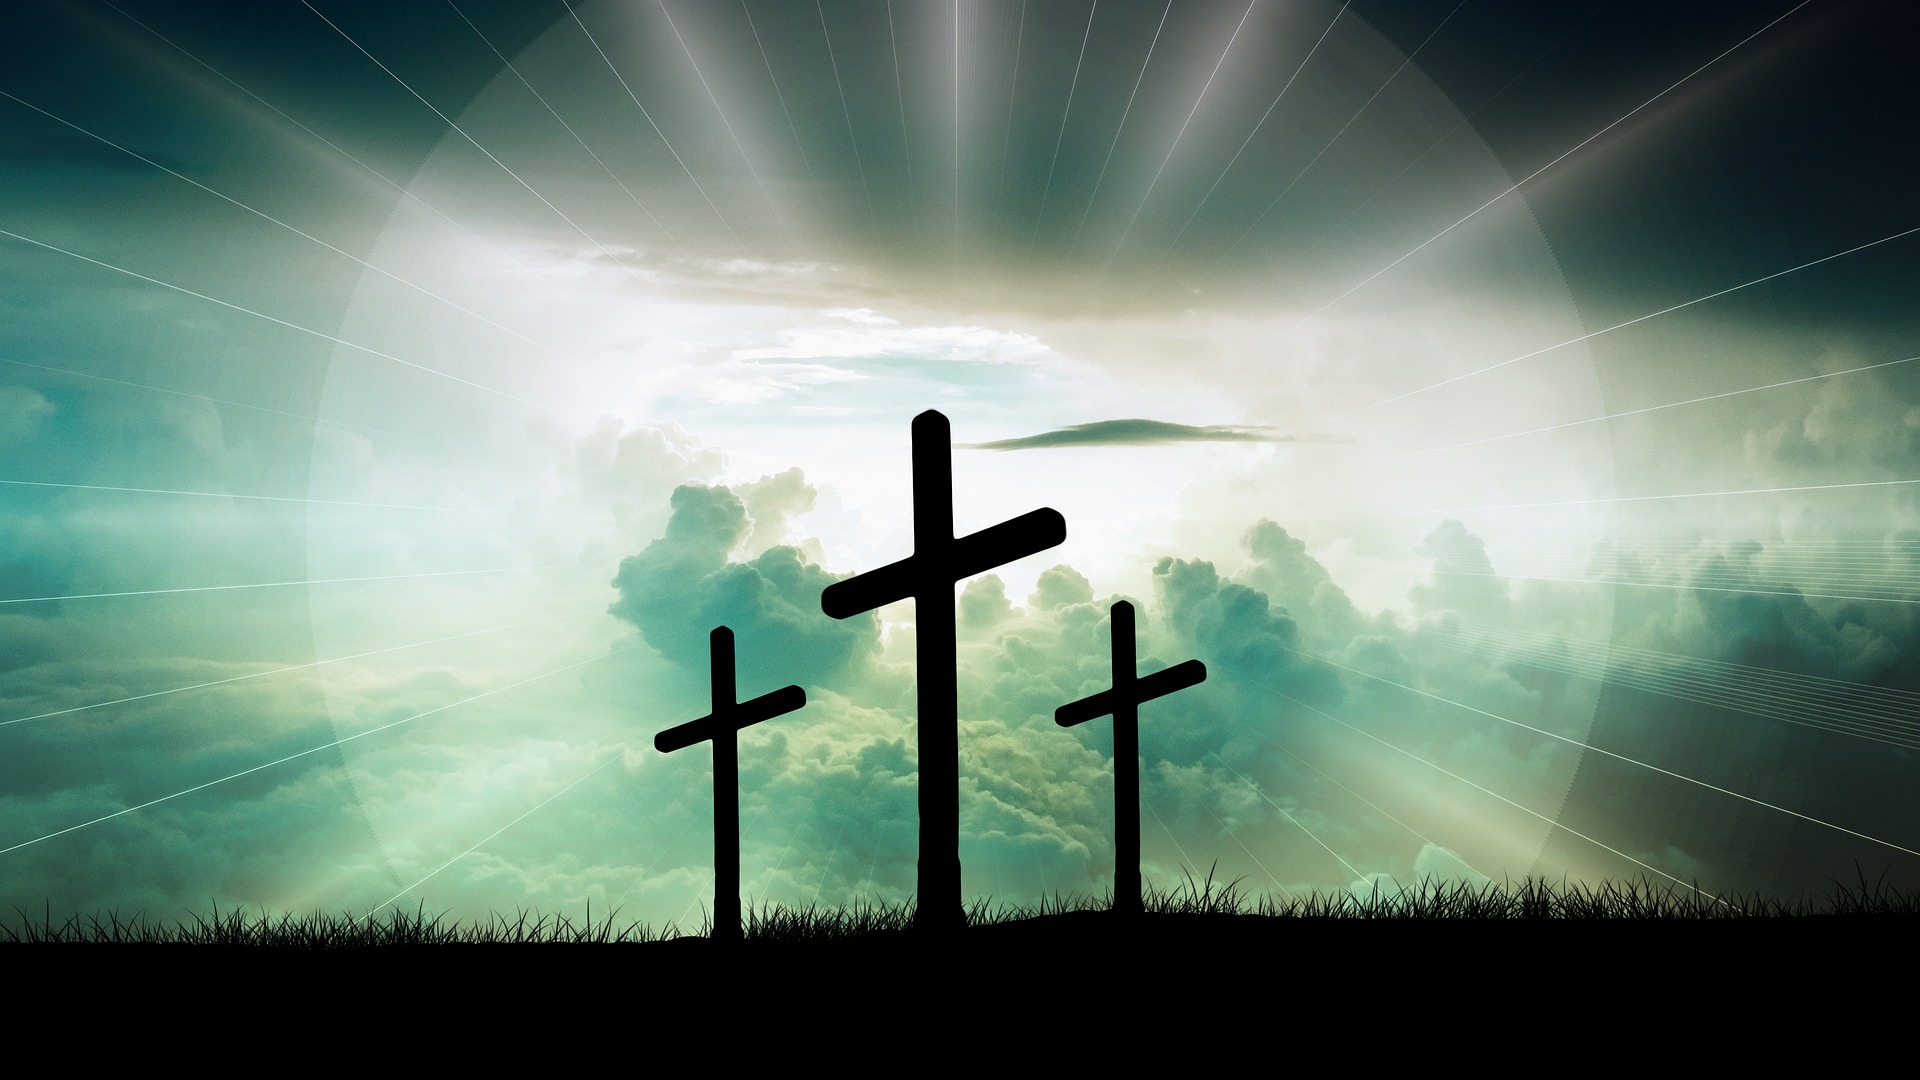 Three crosses with illuminating light